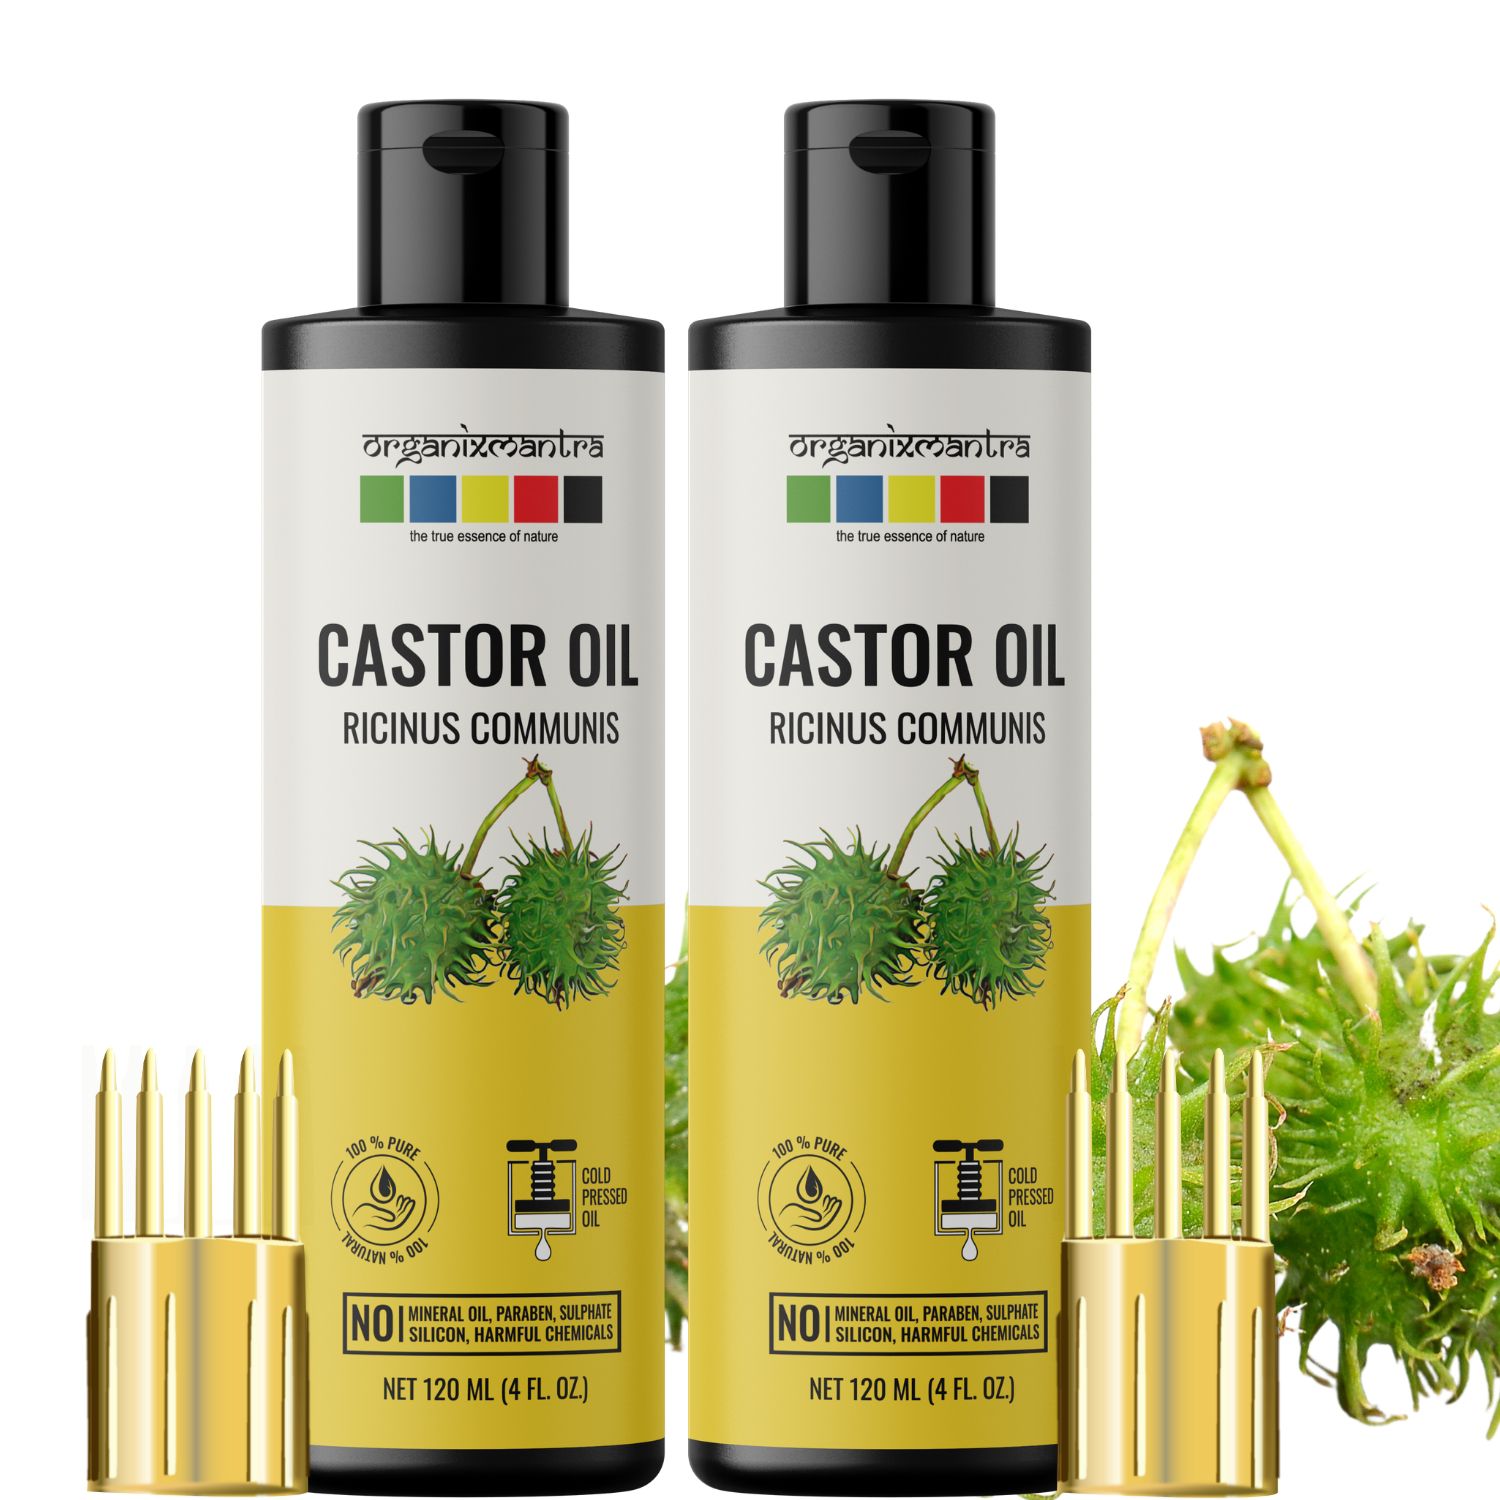     			Organix Mantra Castor Oil, Cold Pressed Organic Oil, 120ML x 2